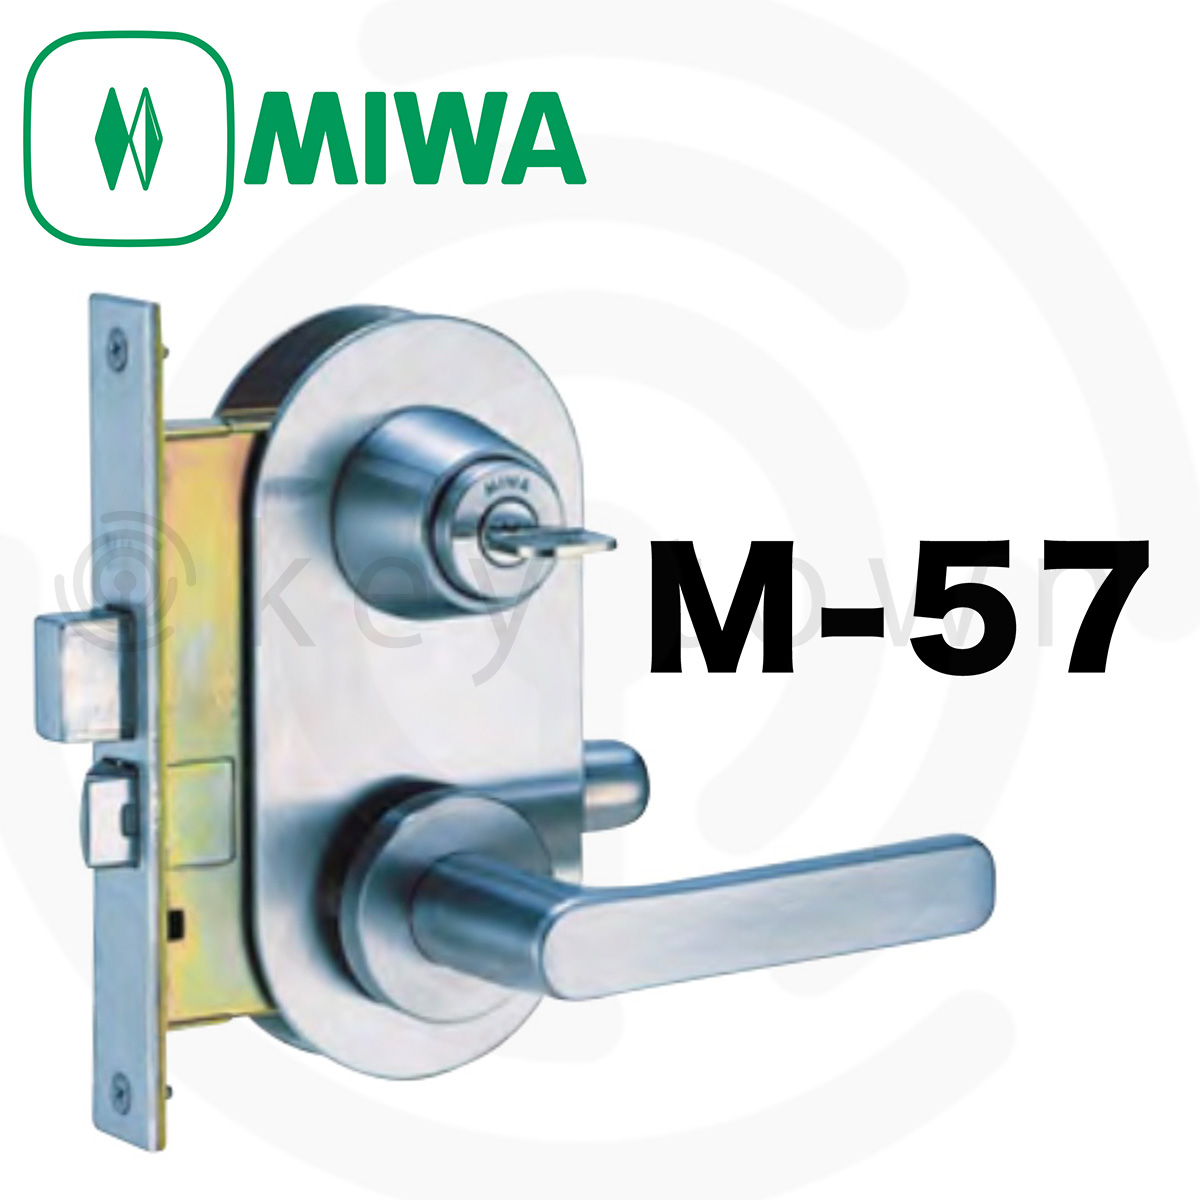 MIWA 【美和ロック】 特殊錠 玄関錠 [MIWA-M-57] Kシリーズ[M-57]｜鍵 